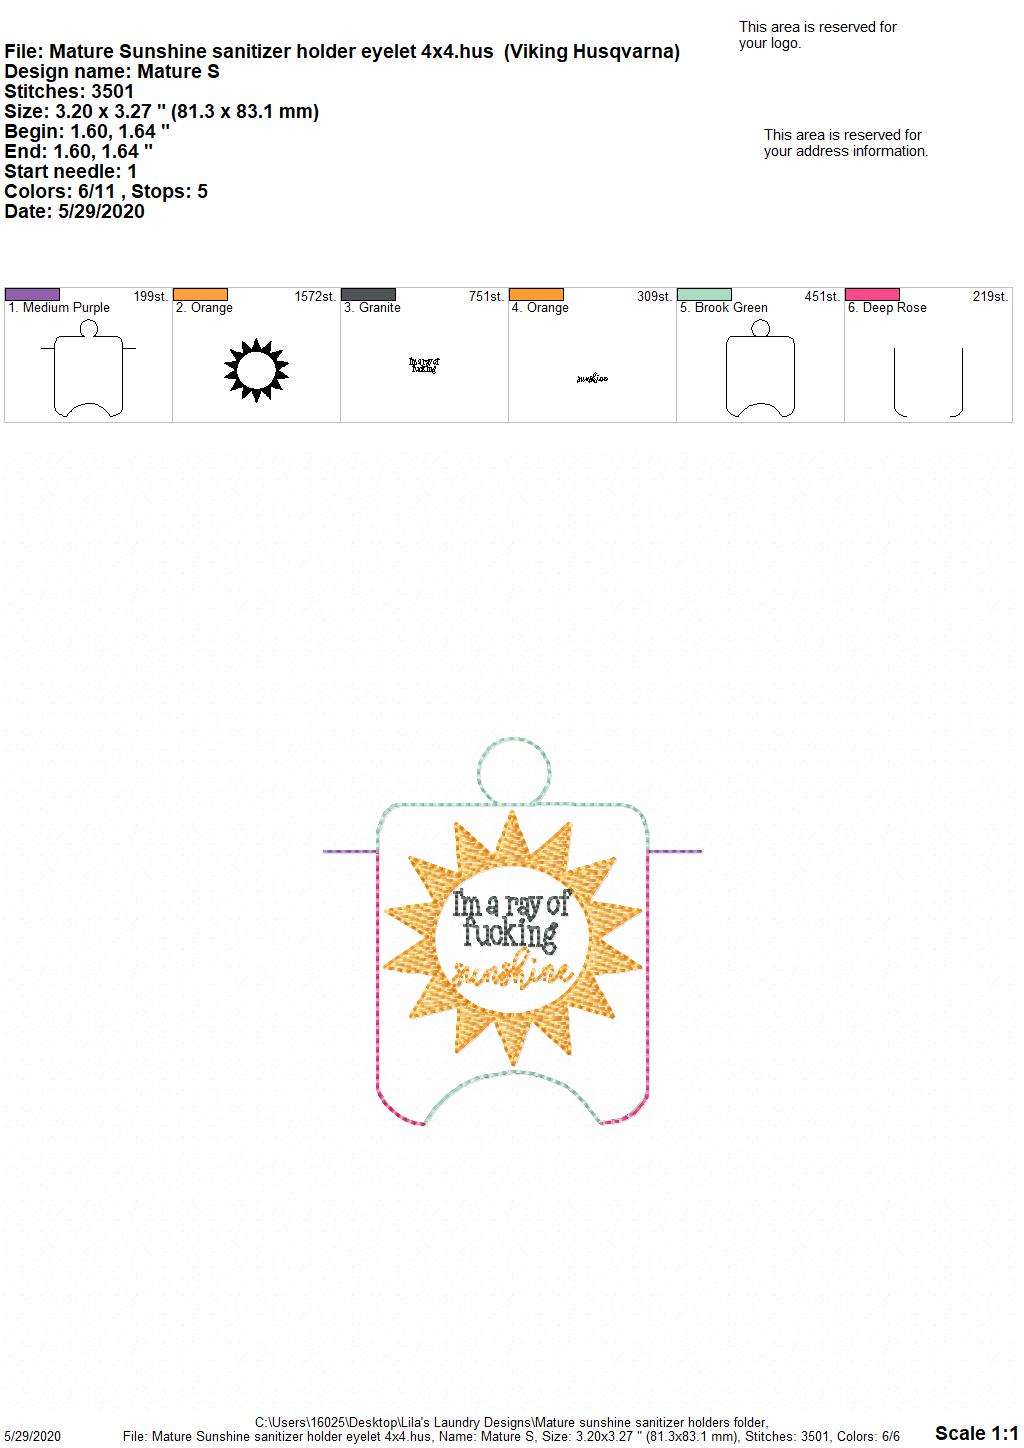 Mature Sunshine Sanitizer Holders - Embroidery Design - DIGITAL Embroidery DESIGN